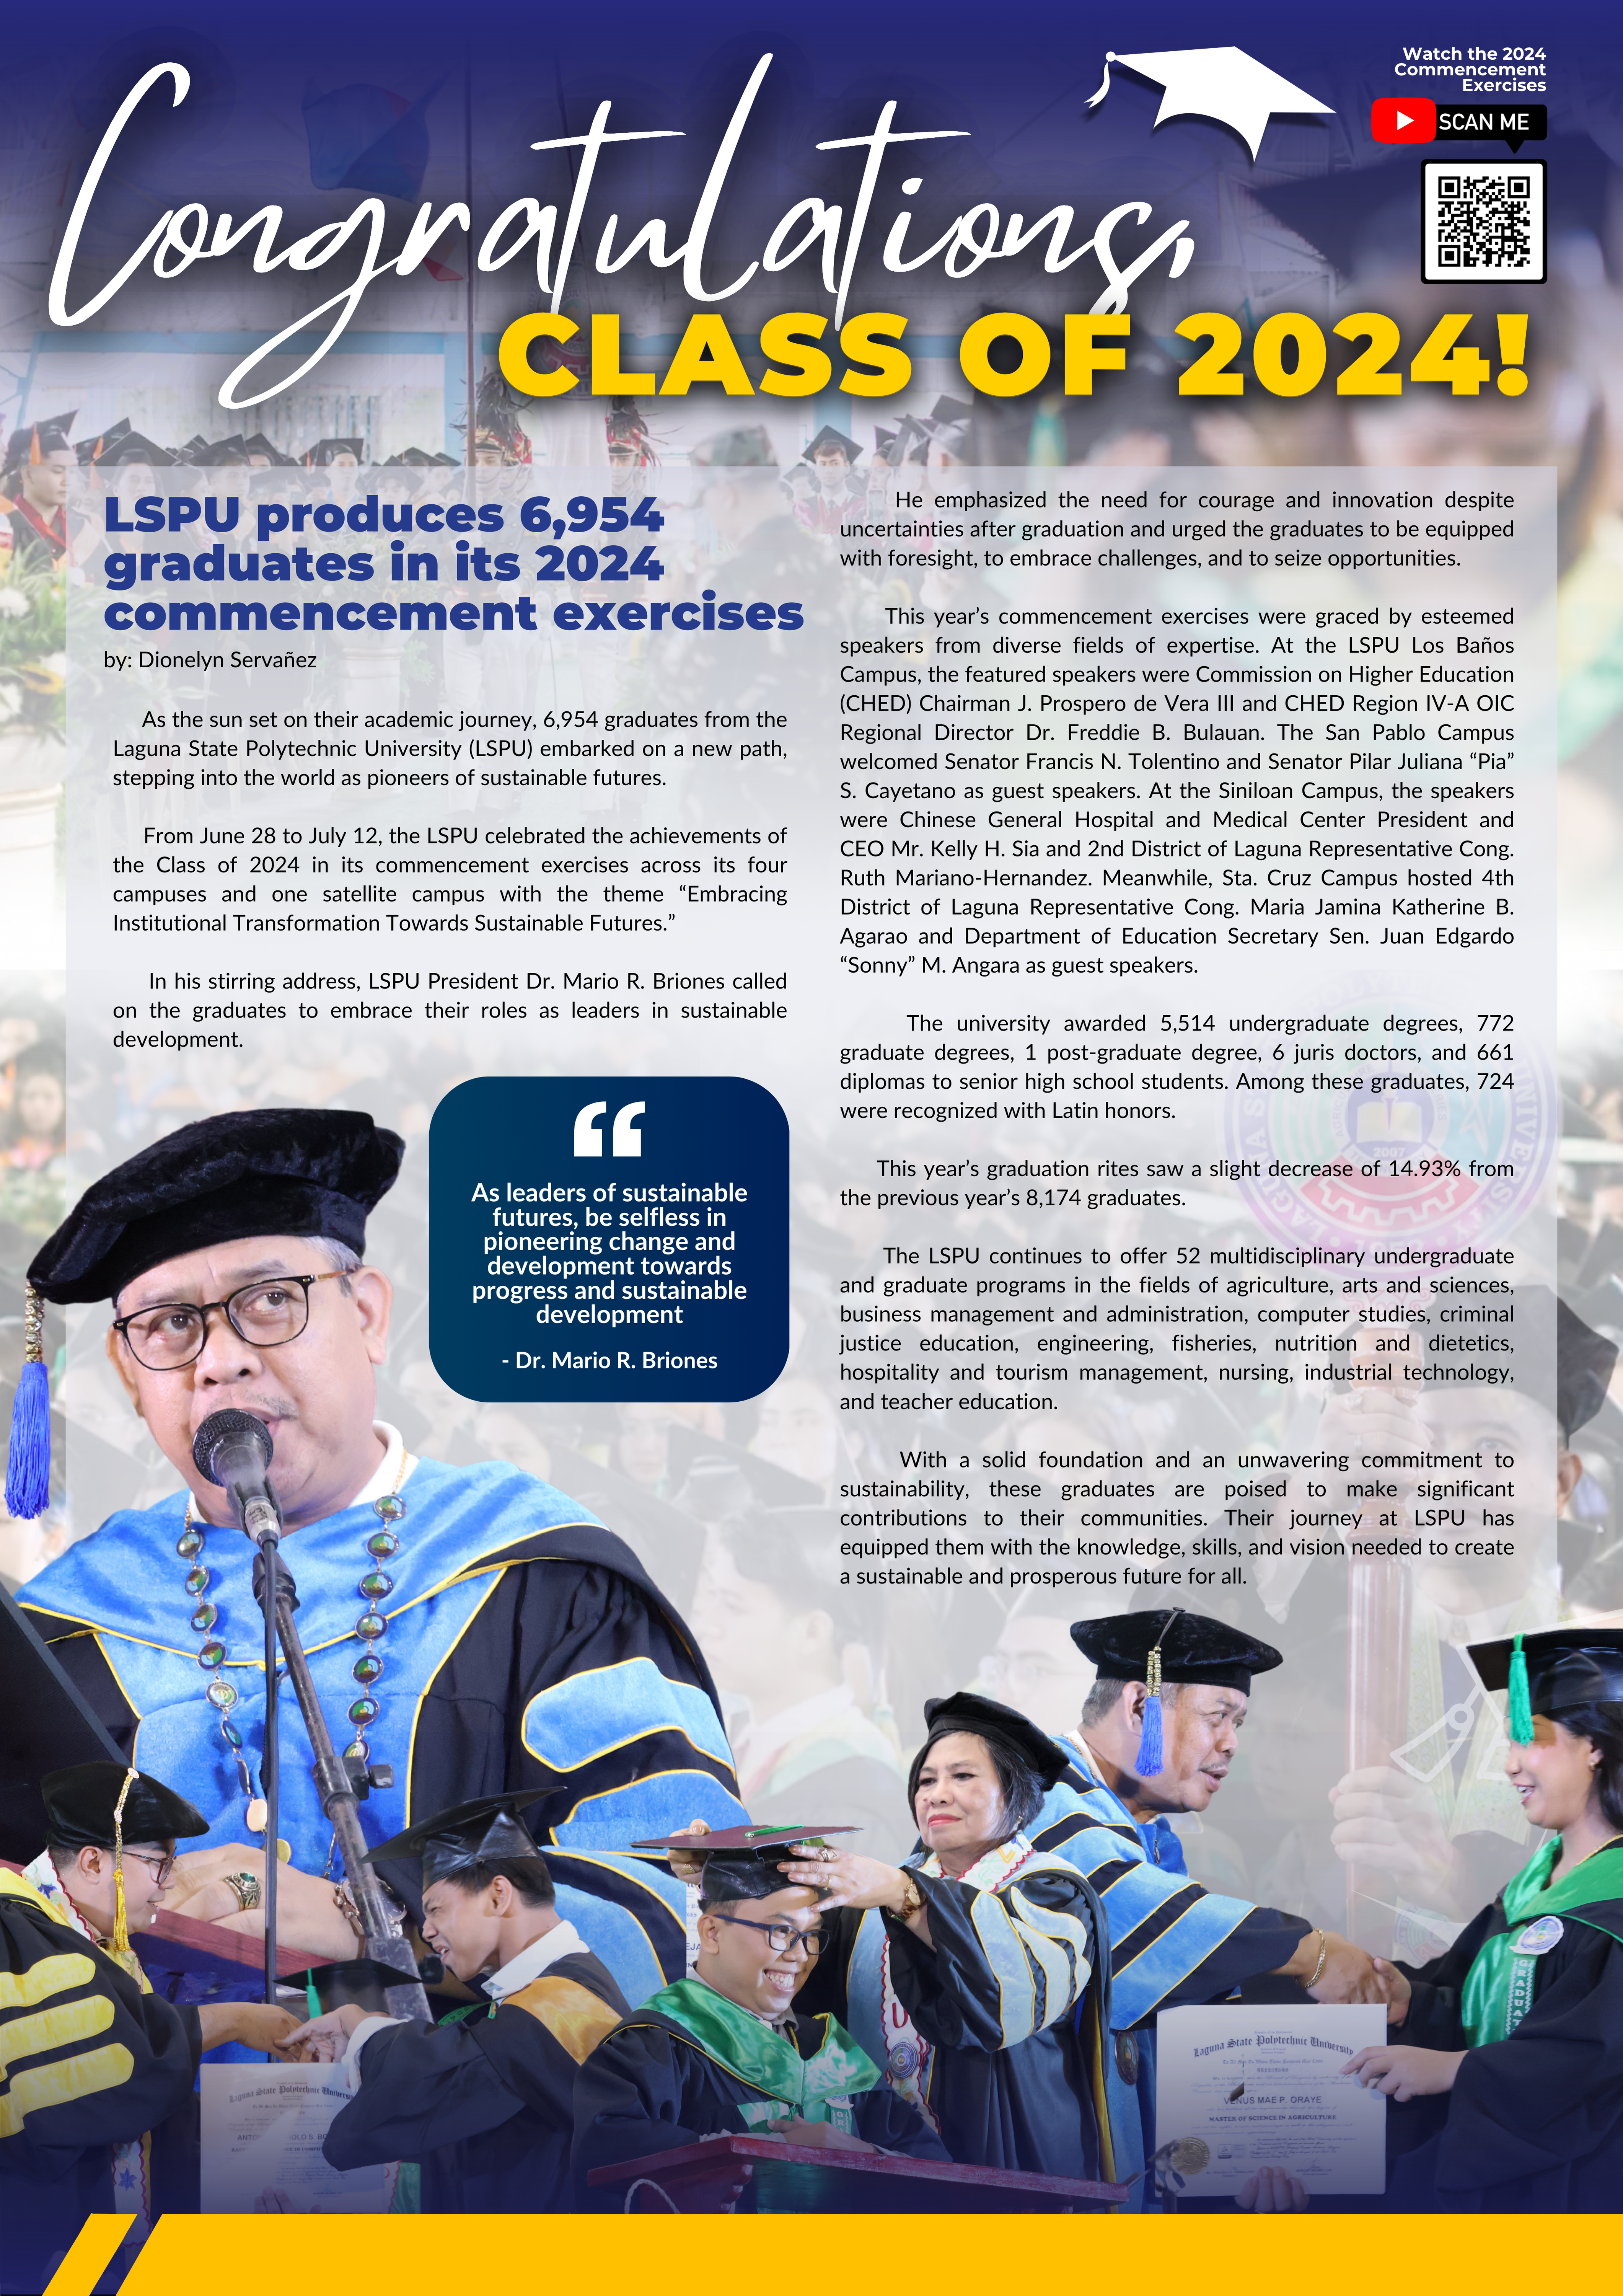 LSPU produces 6,954 graduates in its 2024 commencement exercises